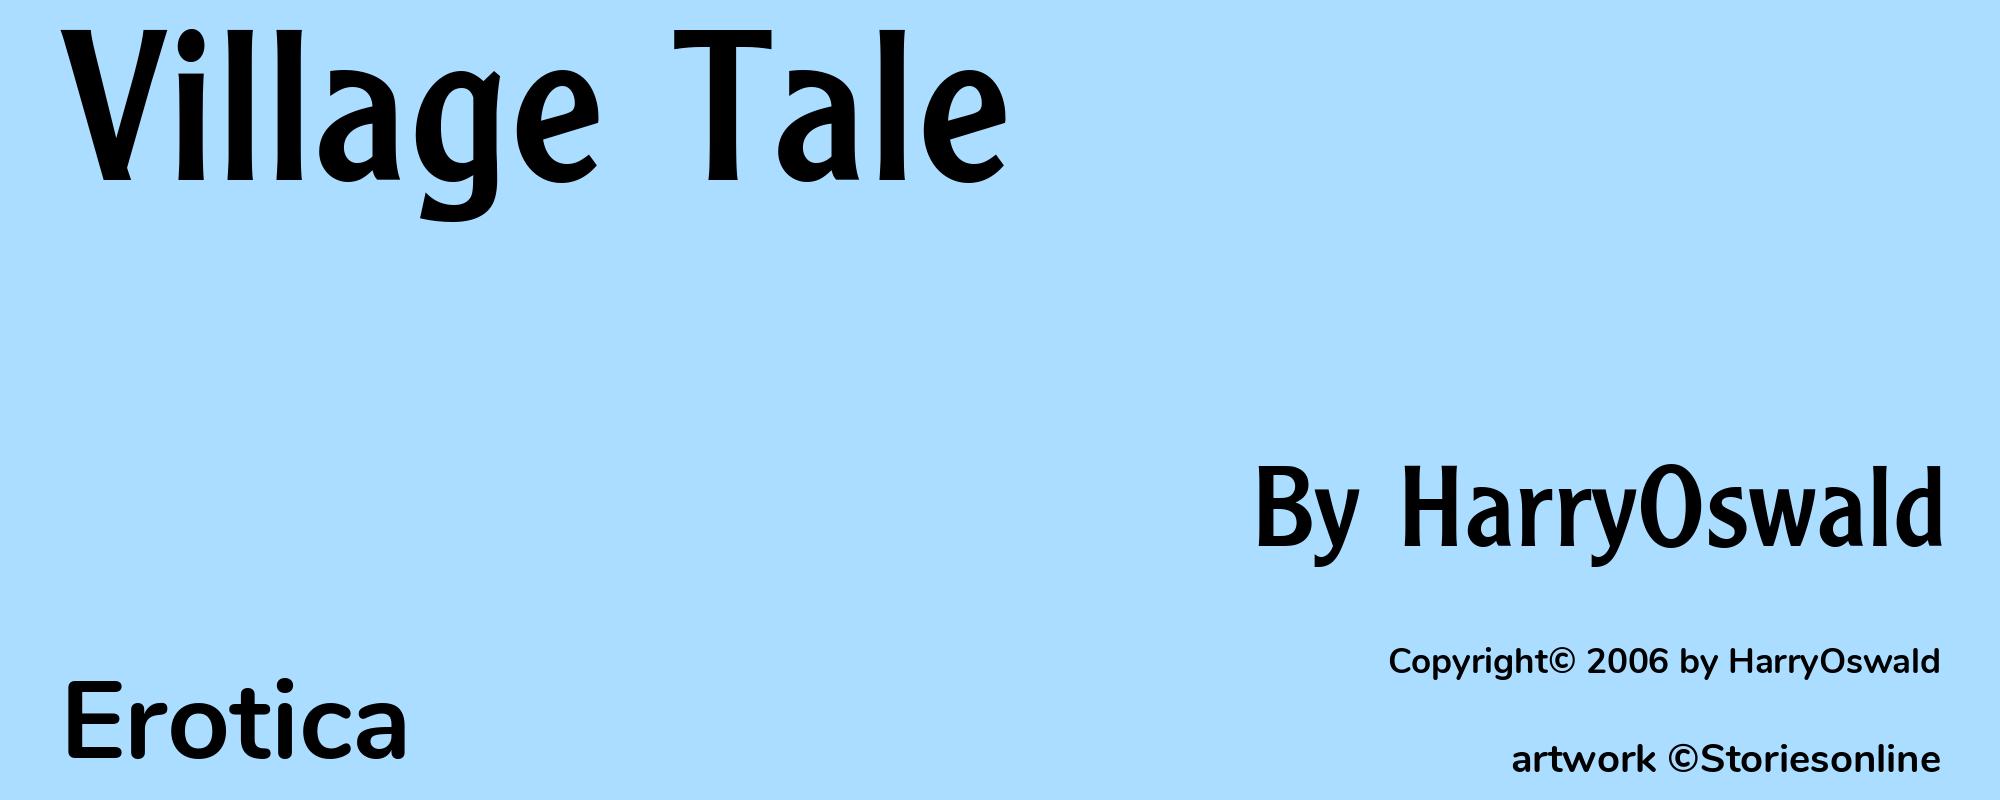 Village Tale - Cover